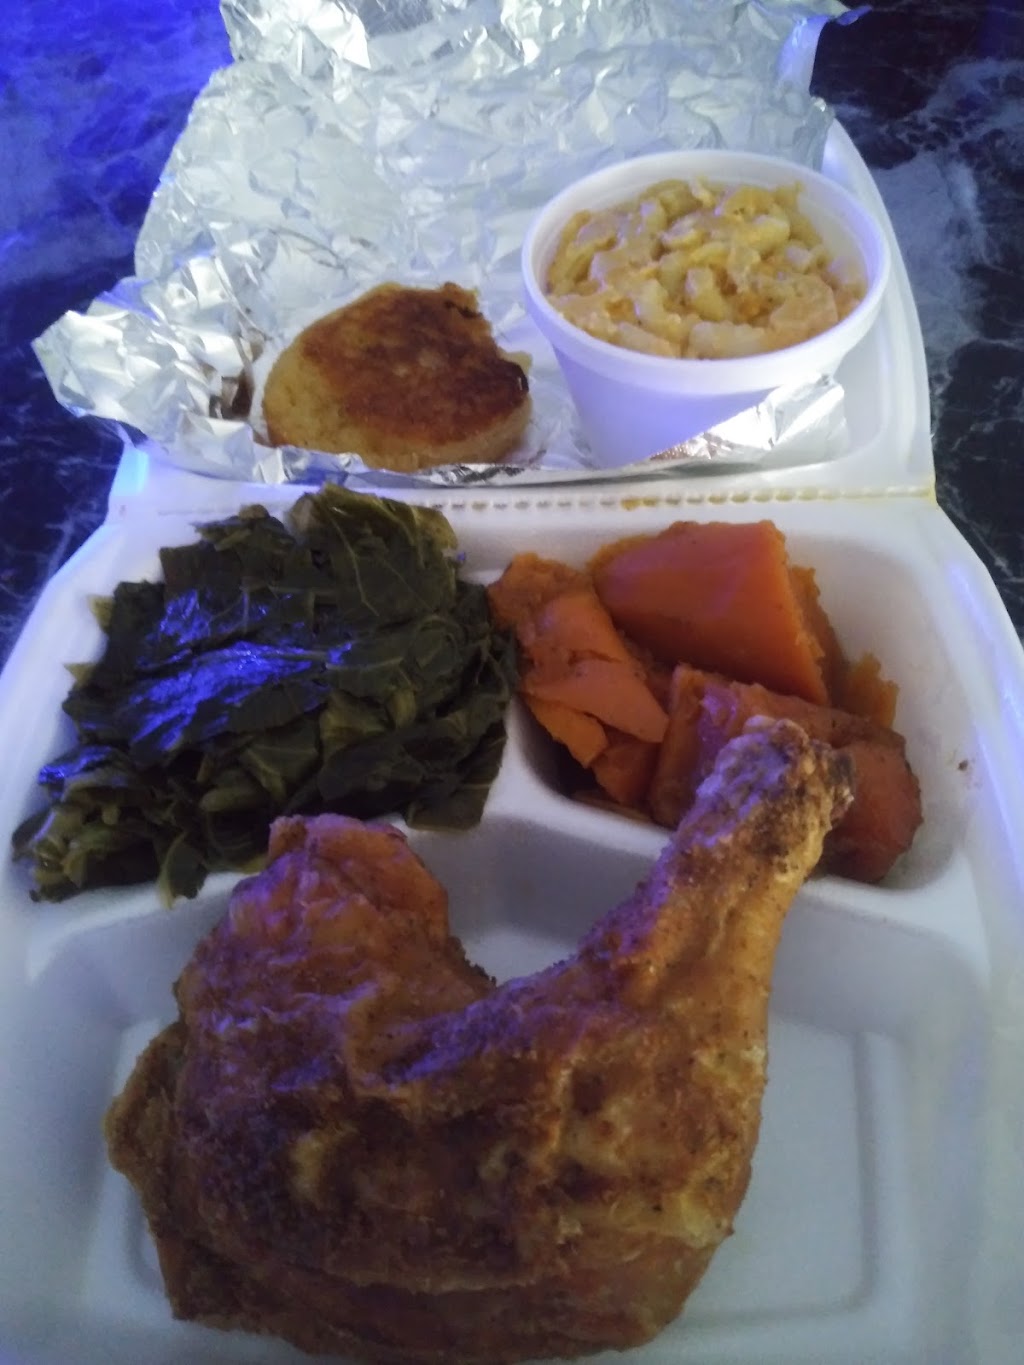 Ms Movales Eatery Soul Food | 1250 GA-138, Riverdale, GA 30296, USA | Phone: (770) 471-3447